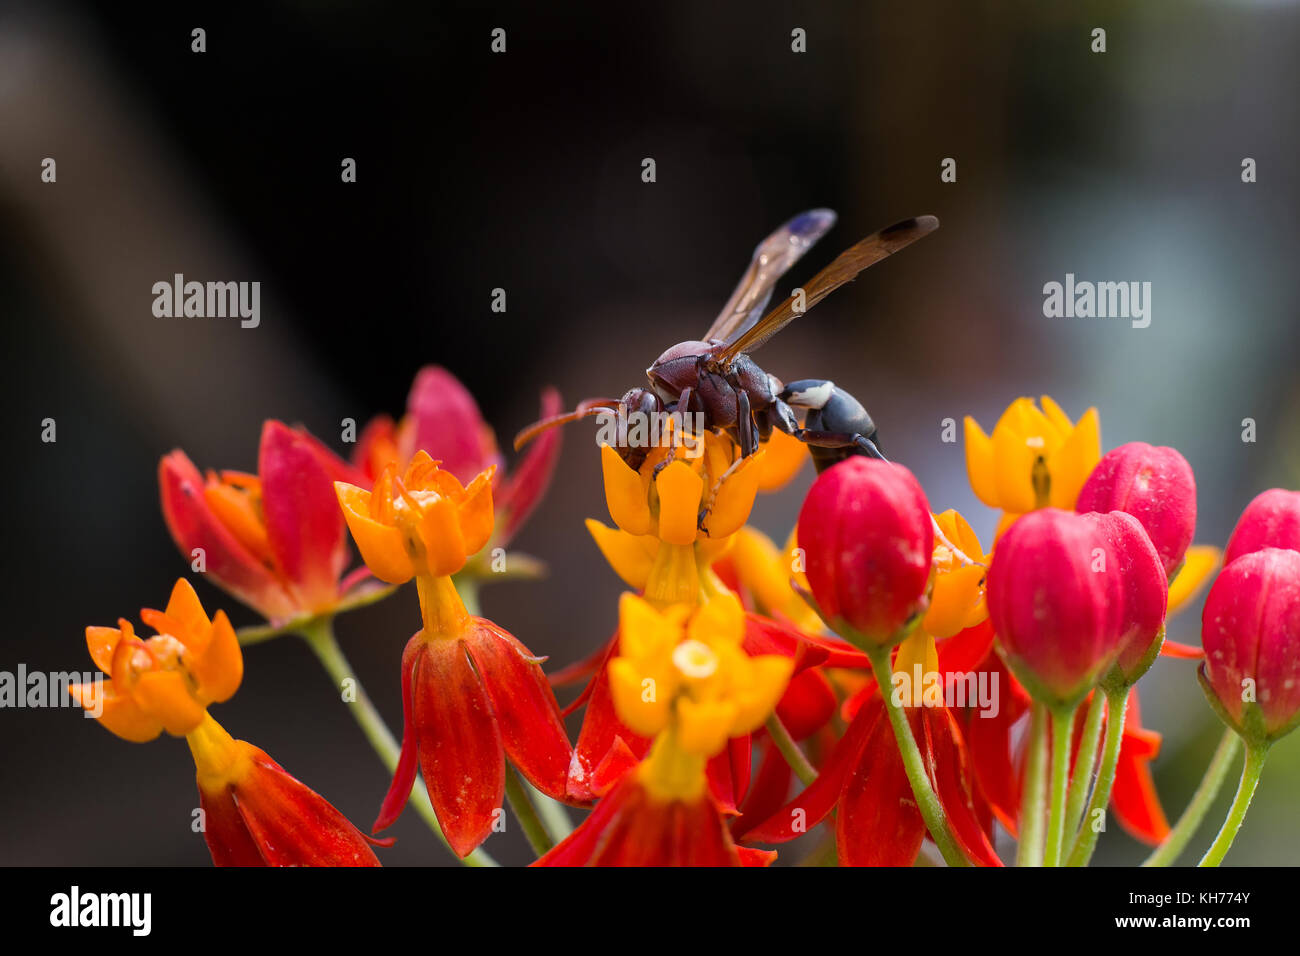 Hornet su un fiore con blur sullo sfondo, hornet selezionare focus, close-up hornet con fiore rosso, macro hornet sfocate o confuse soft focus, hornet anima Foto Stock